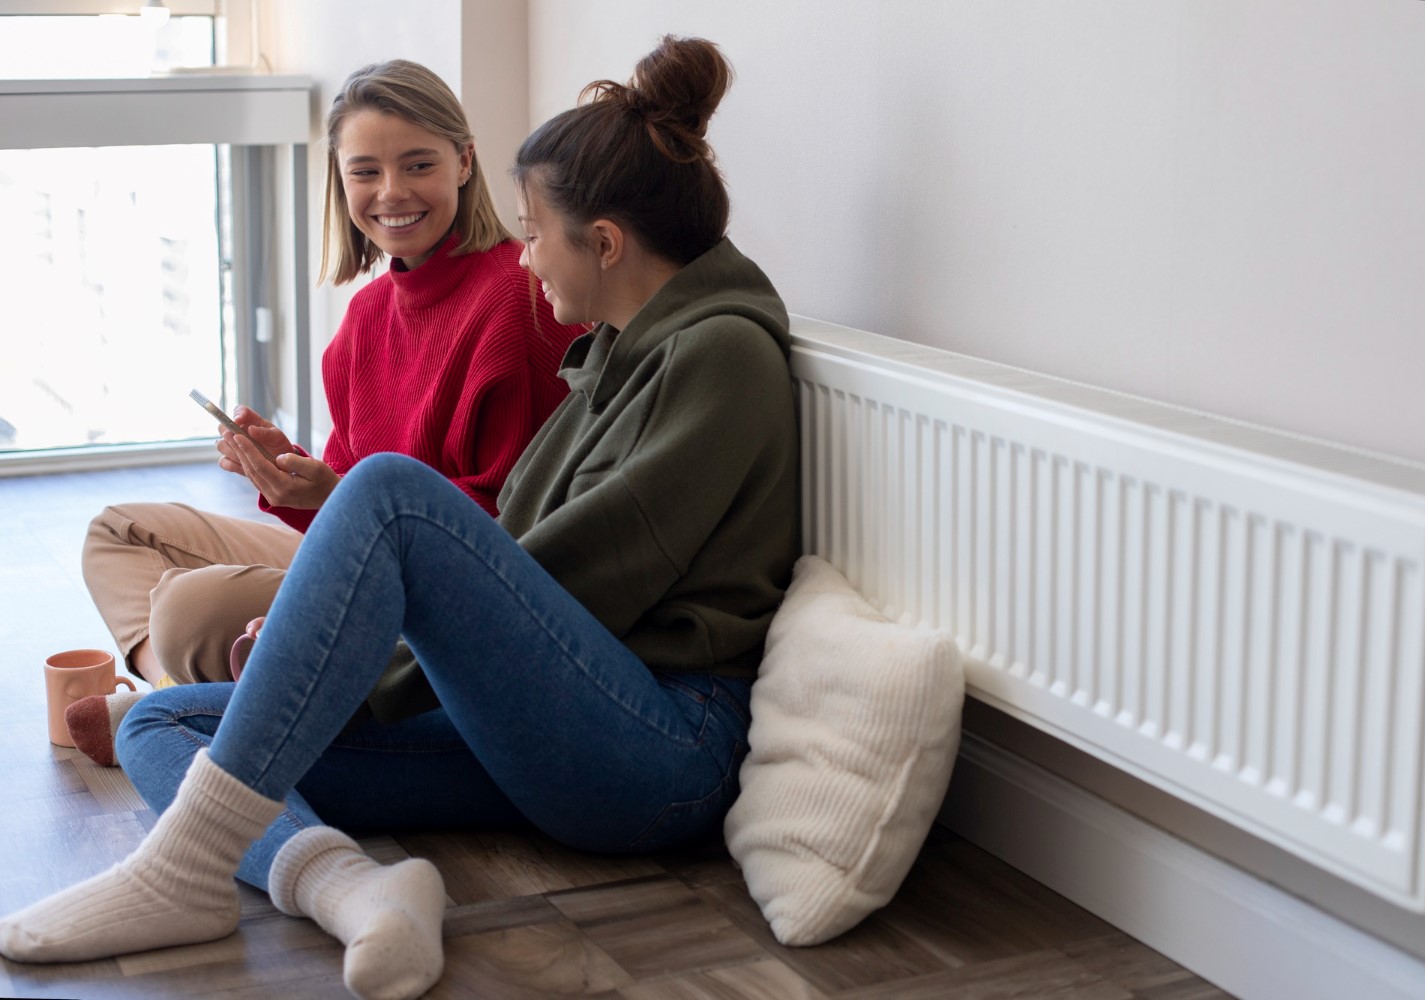 Women looking happy after installing radiators in home